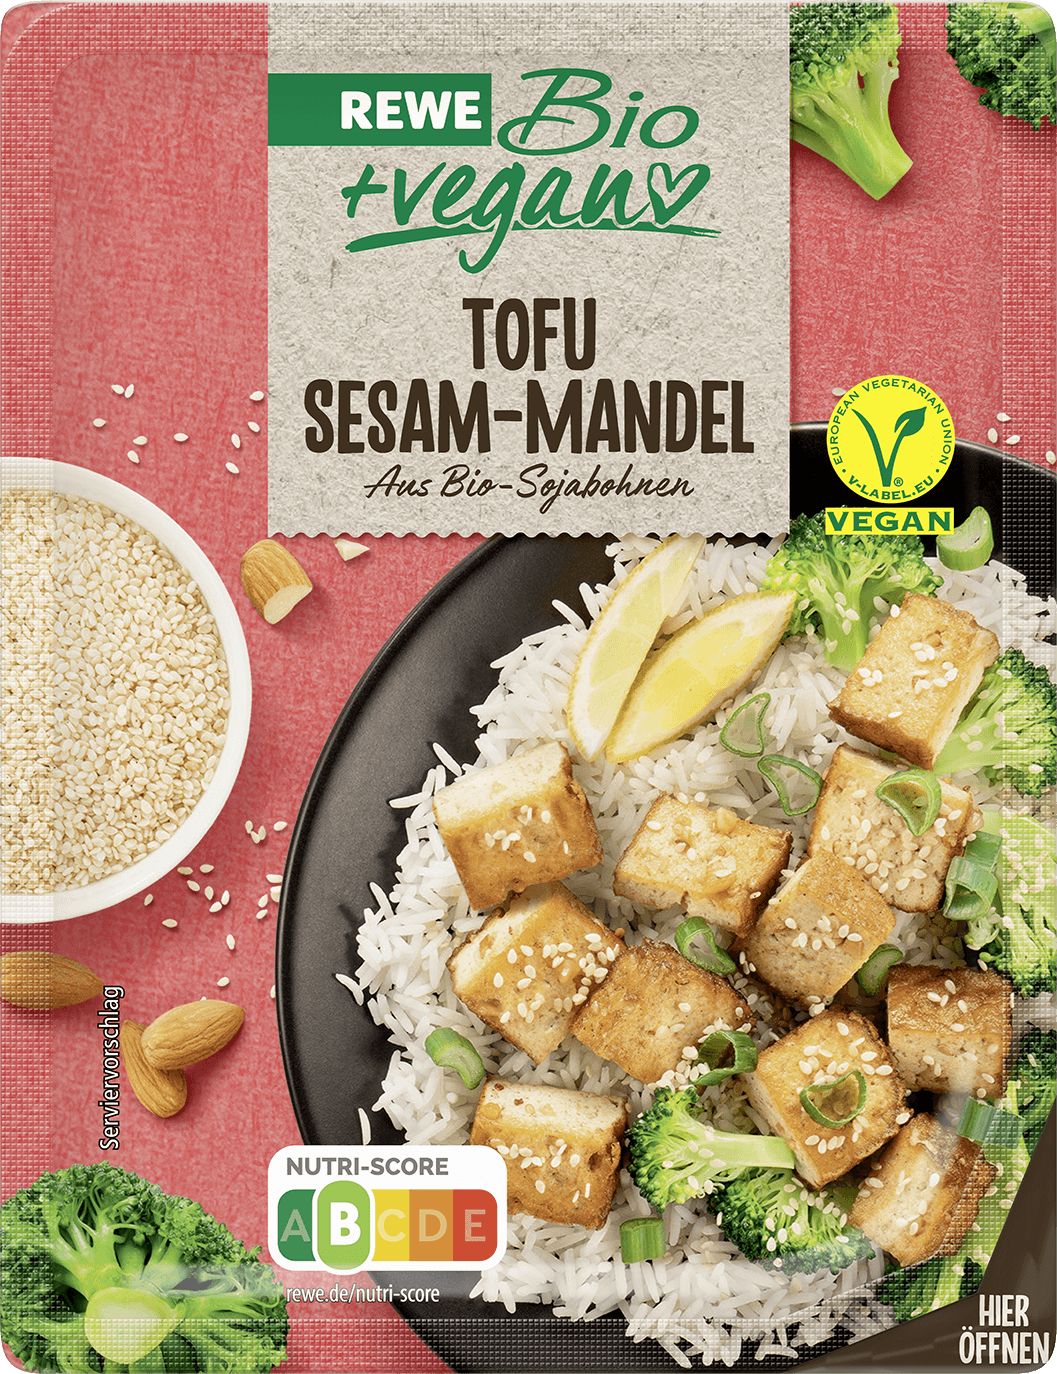 REWE Bio + vegan Tofu Sesam-Mandel